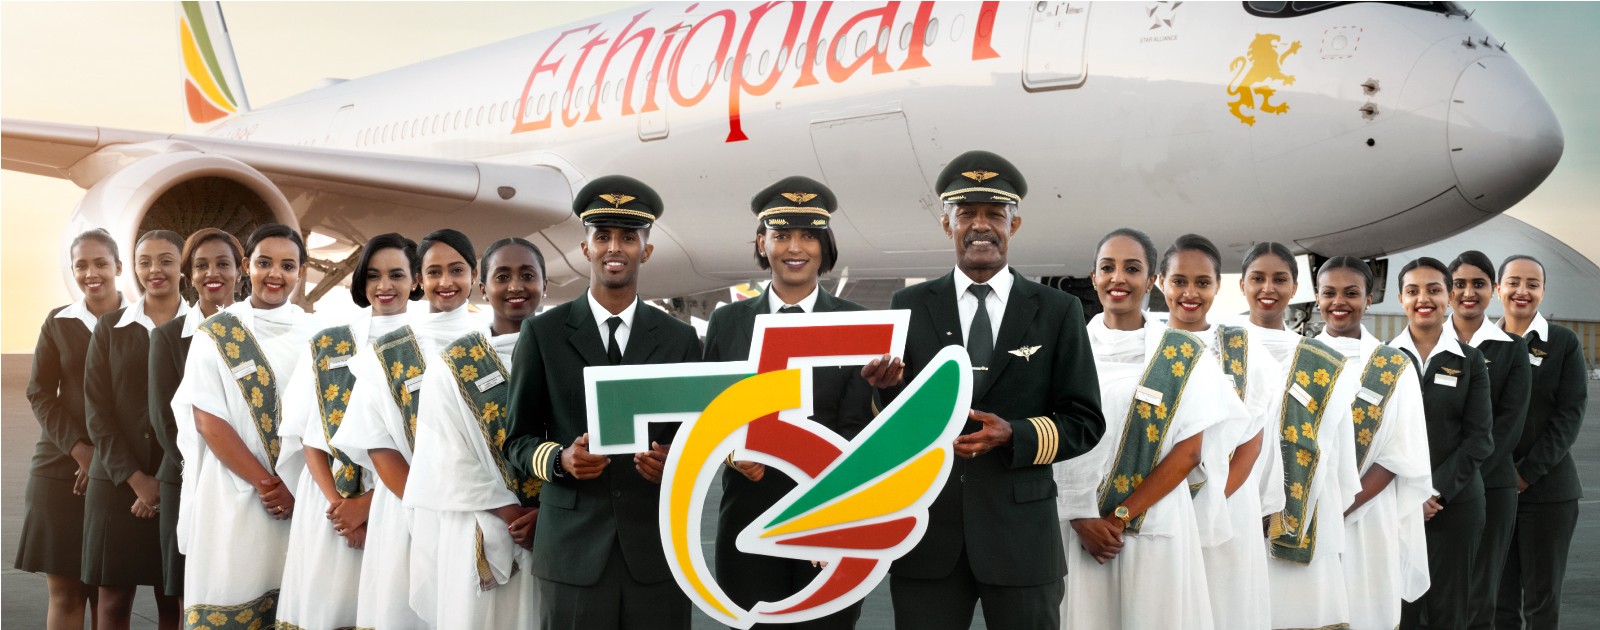 Ethiopian Airlines | LinkedIn